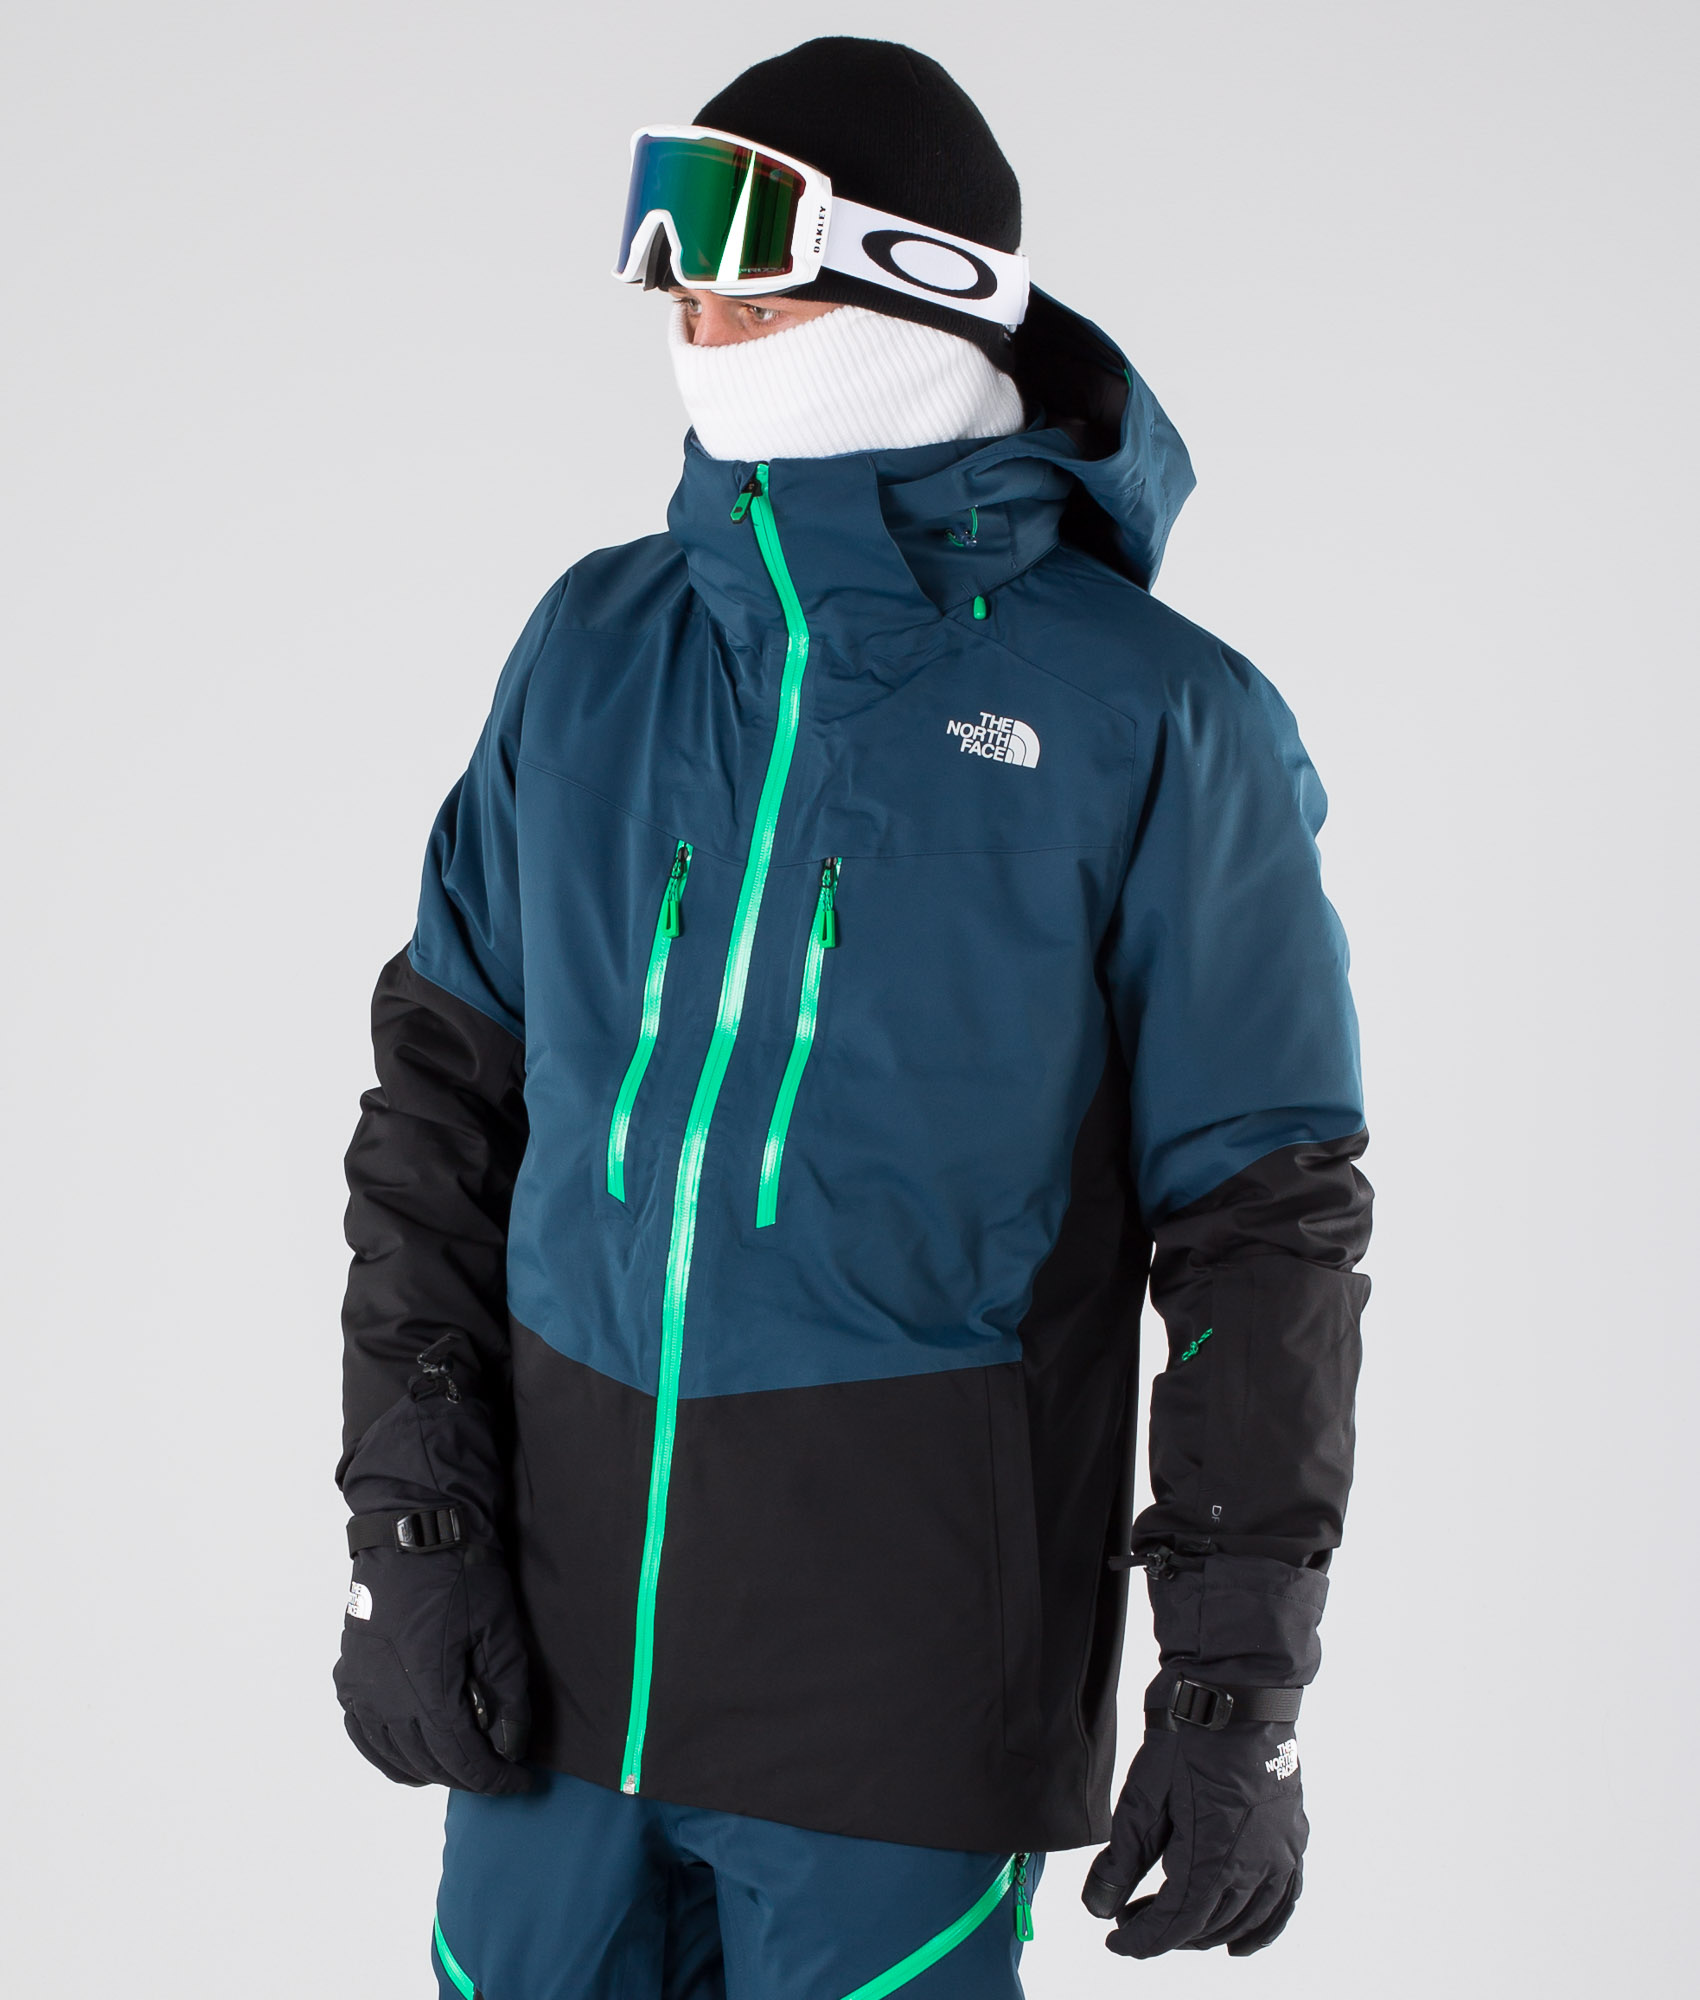 north face chakal jacket sale Online 